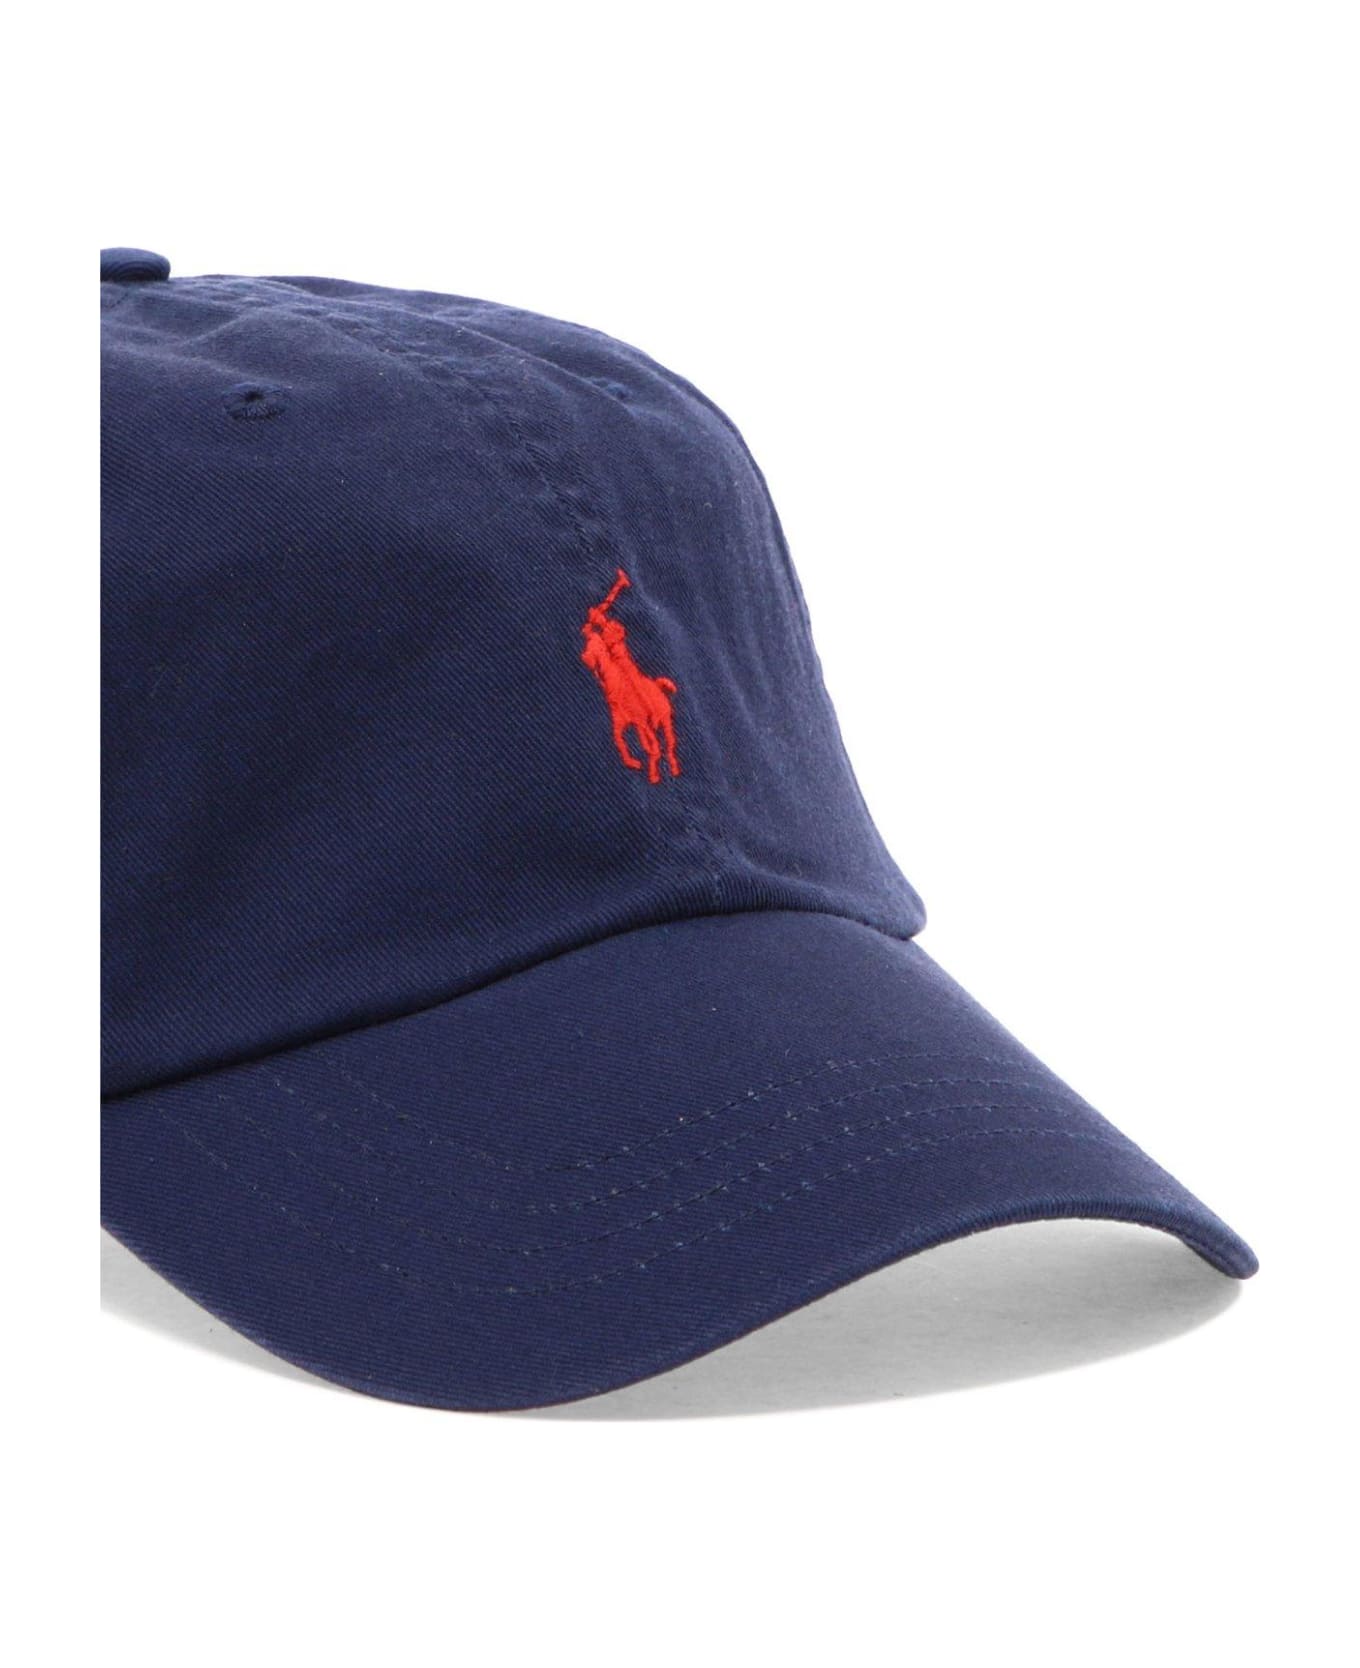 Polo Ralph Lauren Logo-embroidered Baseball Cap - Navy